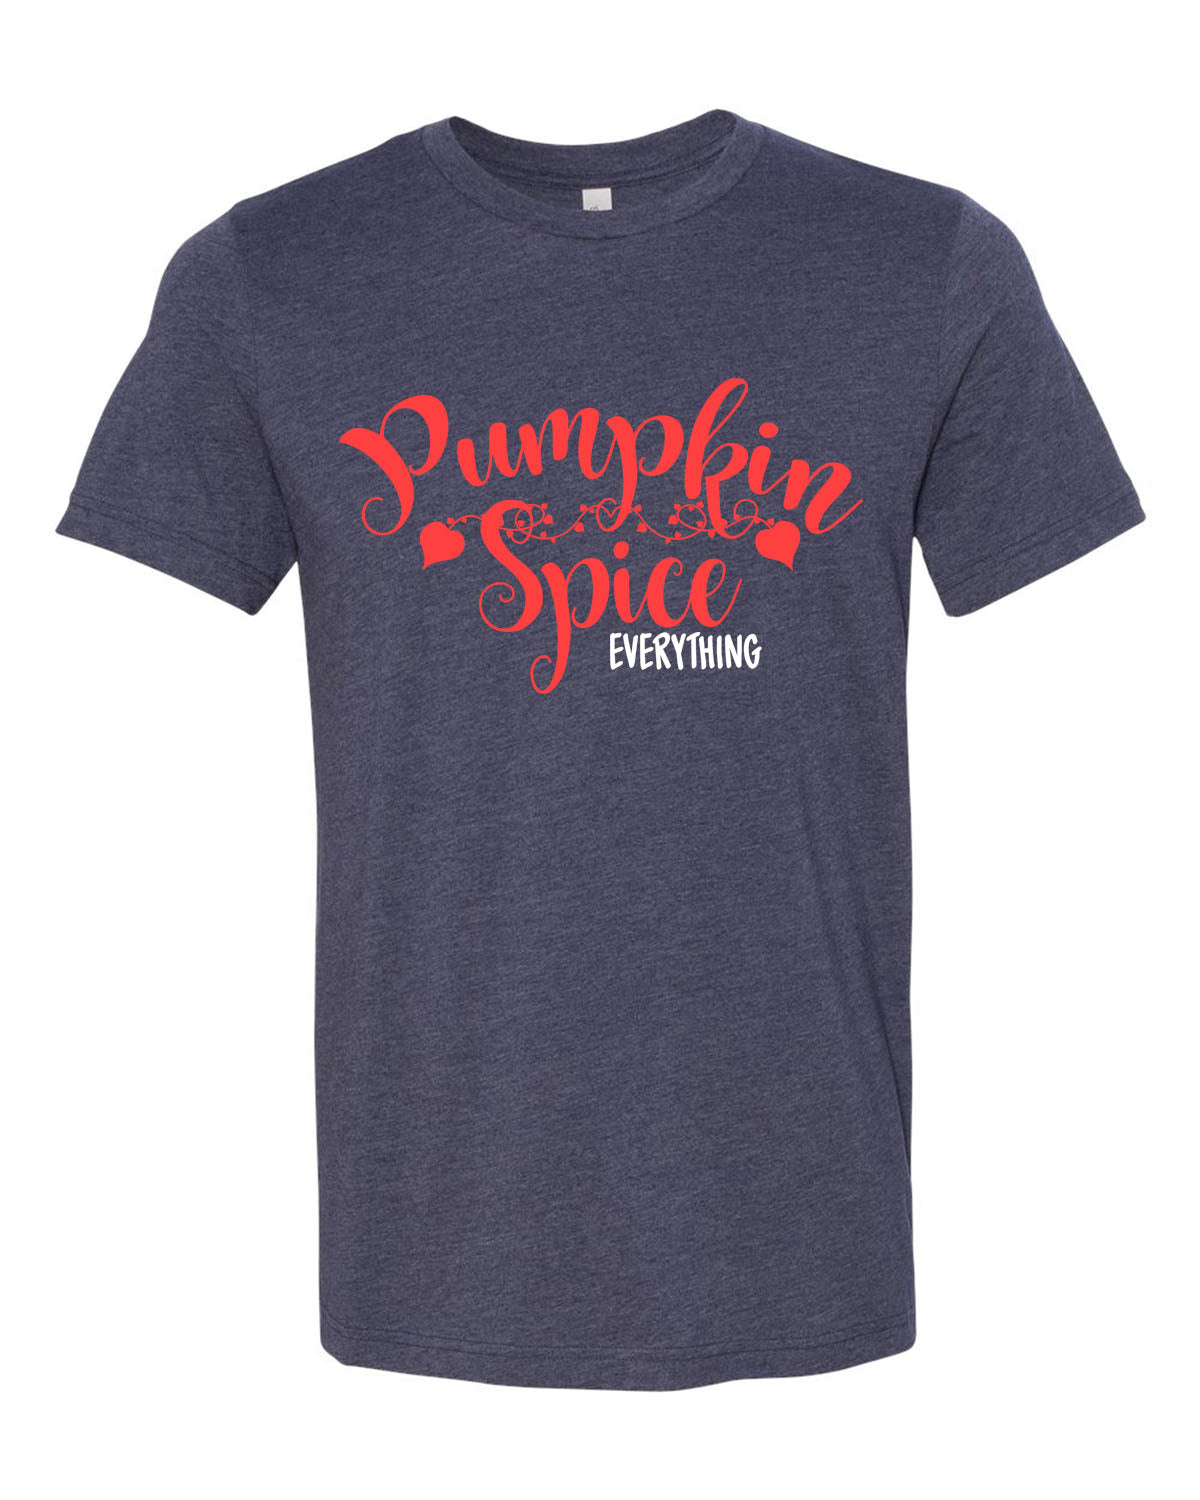 Pumpkin Spice Everything T-Shirt, Adult tee's